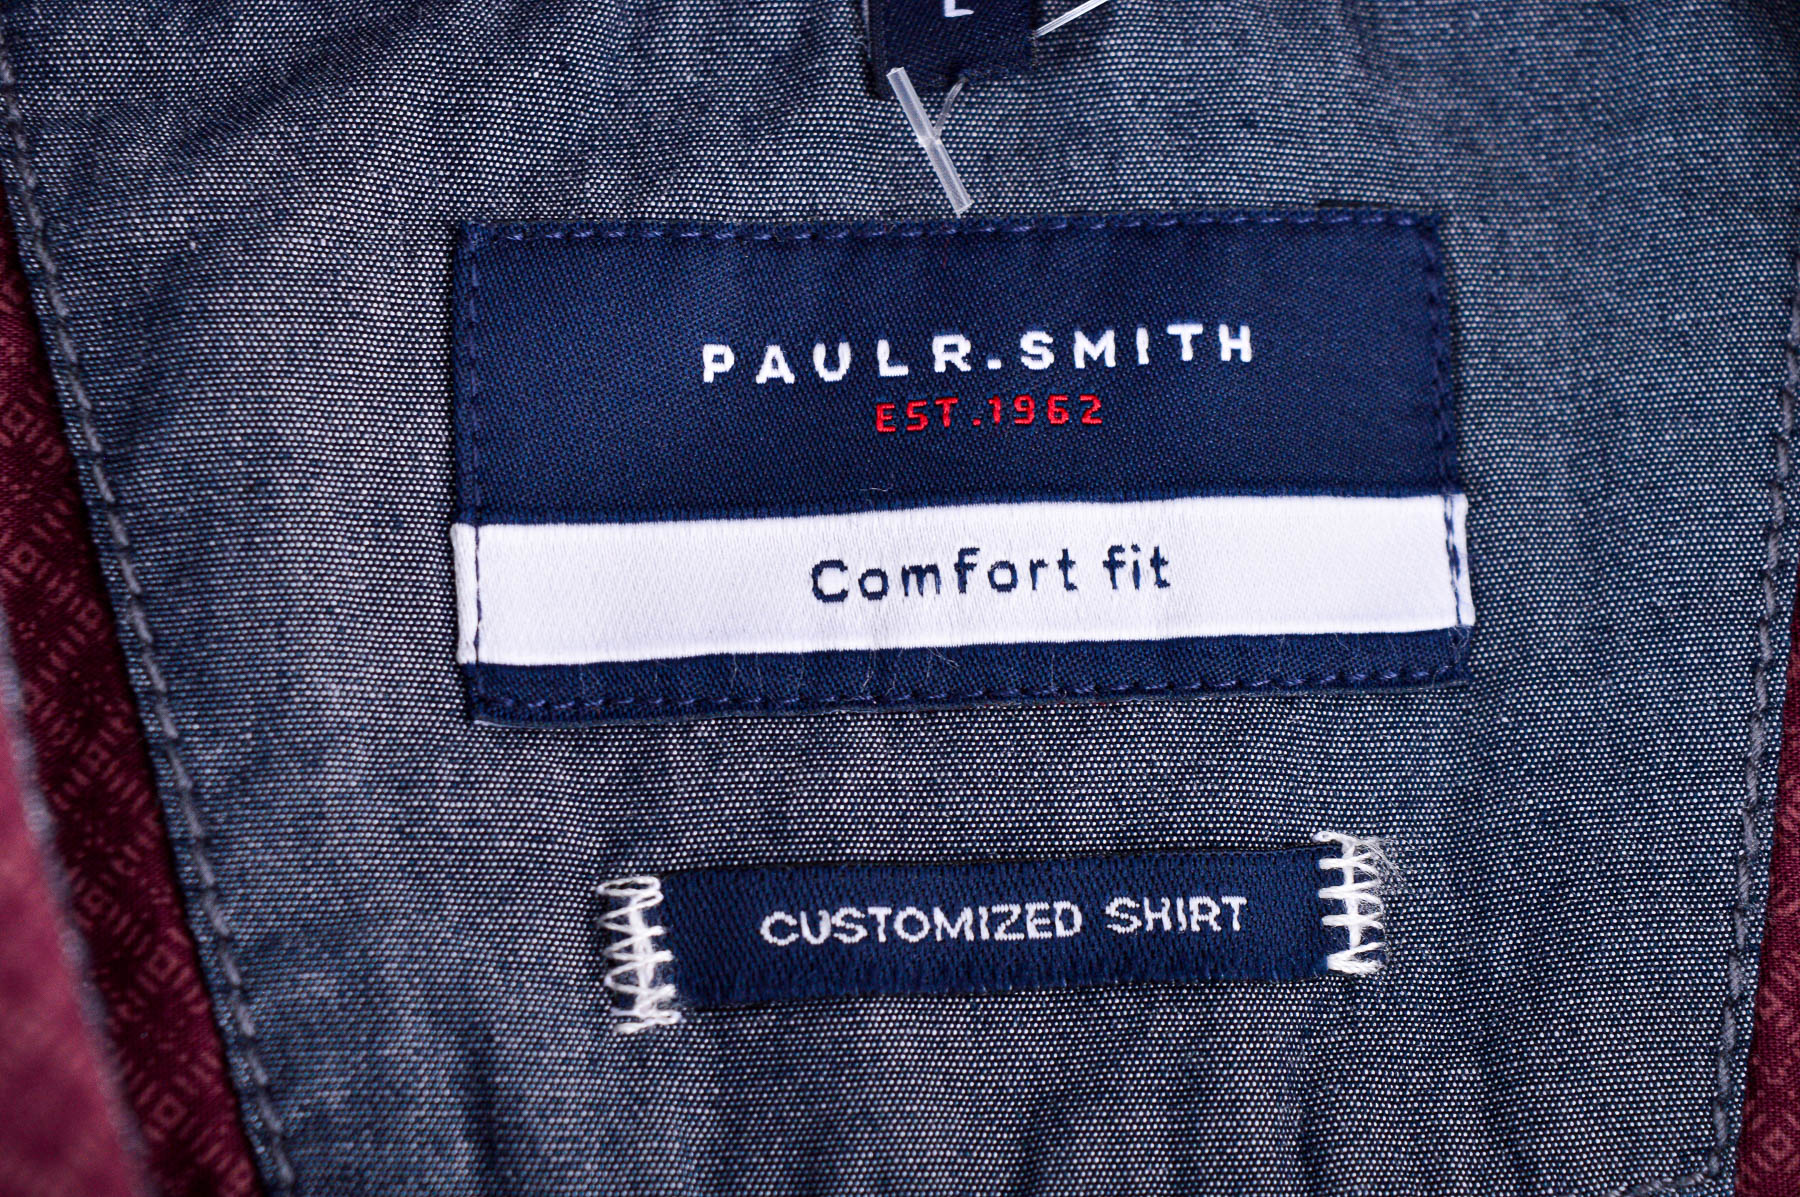 Men's shirt - Paul R. Smith - 2